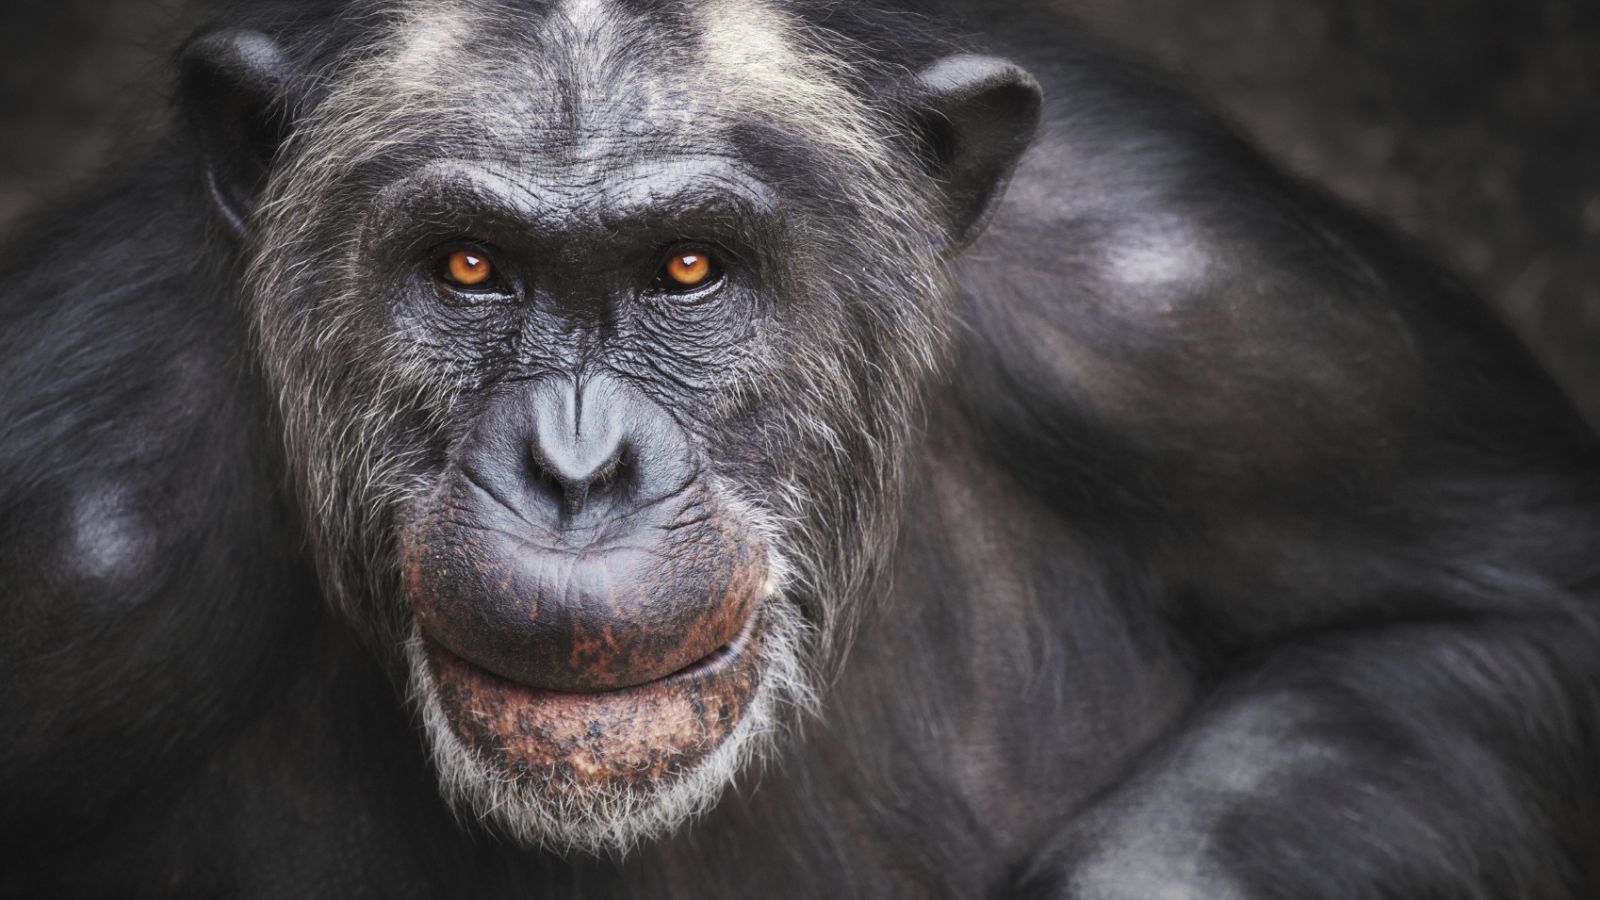 Human diseases are threatening chimpanzees